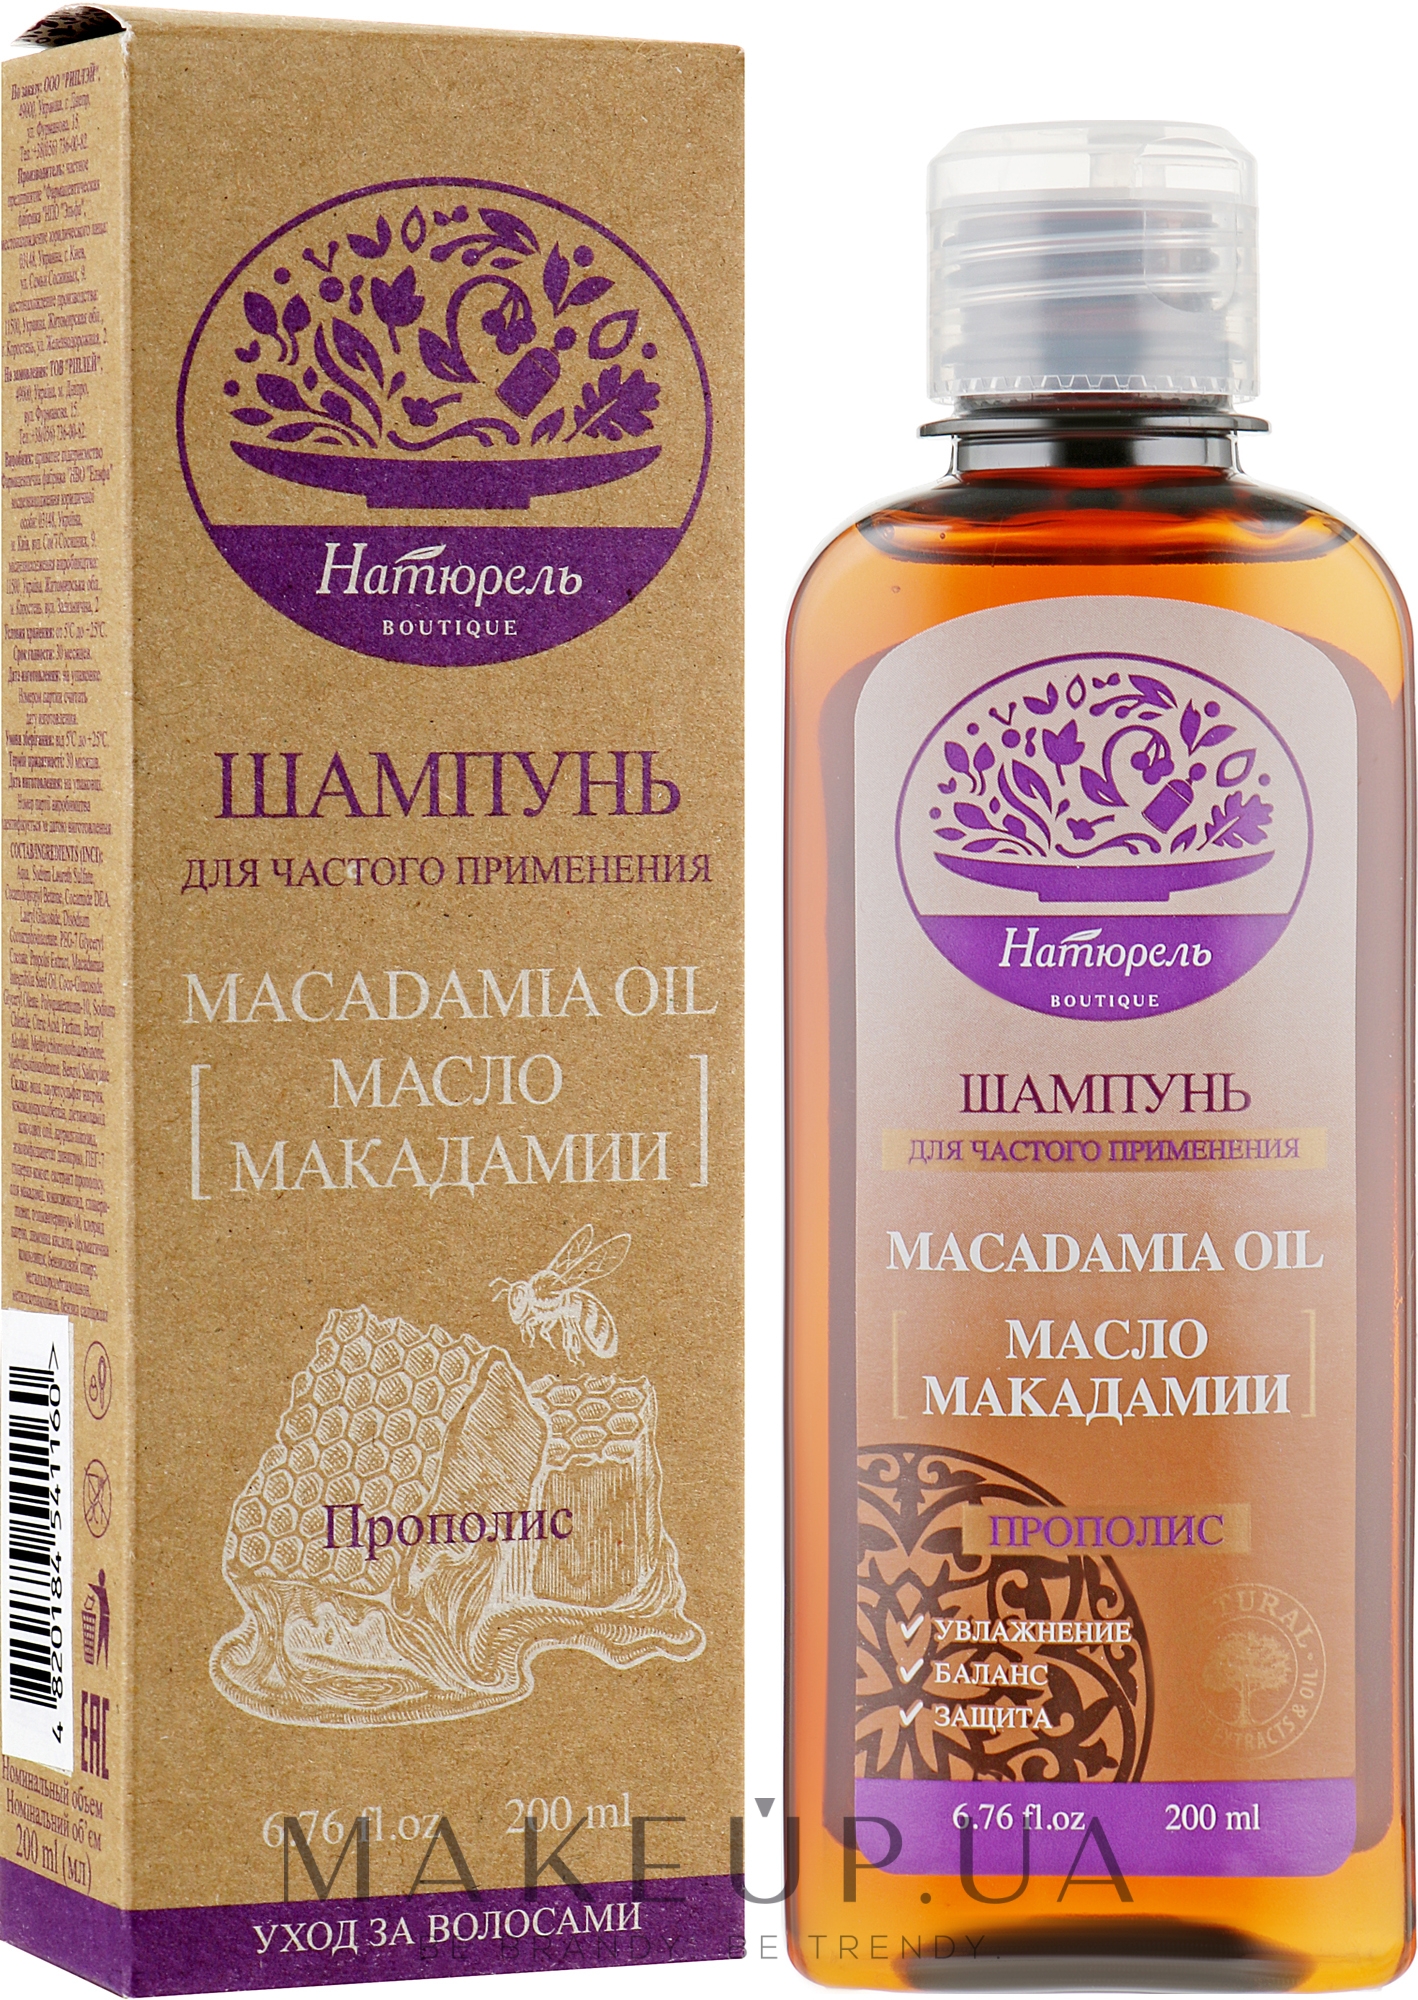 Шампунь для волосся з маслом макадамії і прополісом - Натюрель boutique  — фото 200ml